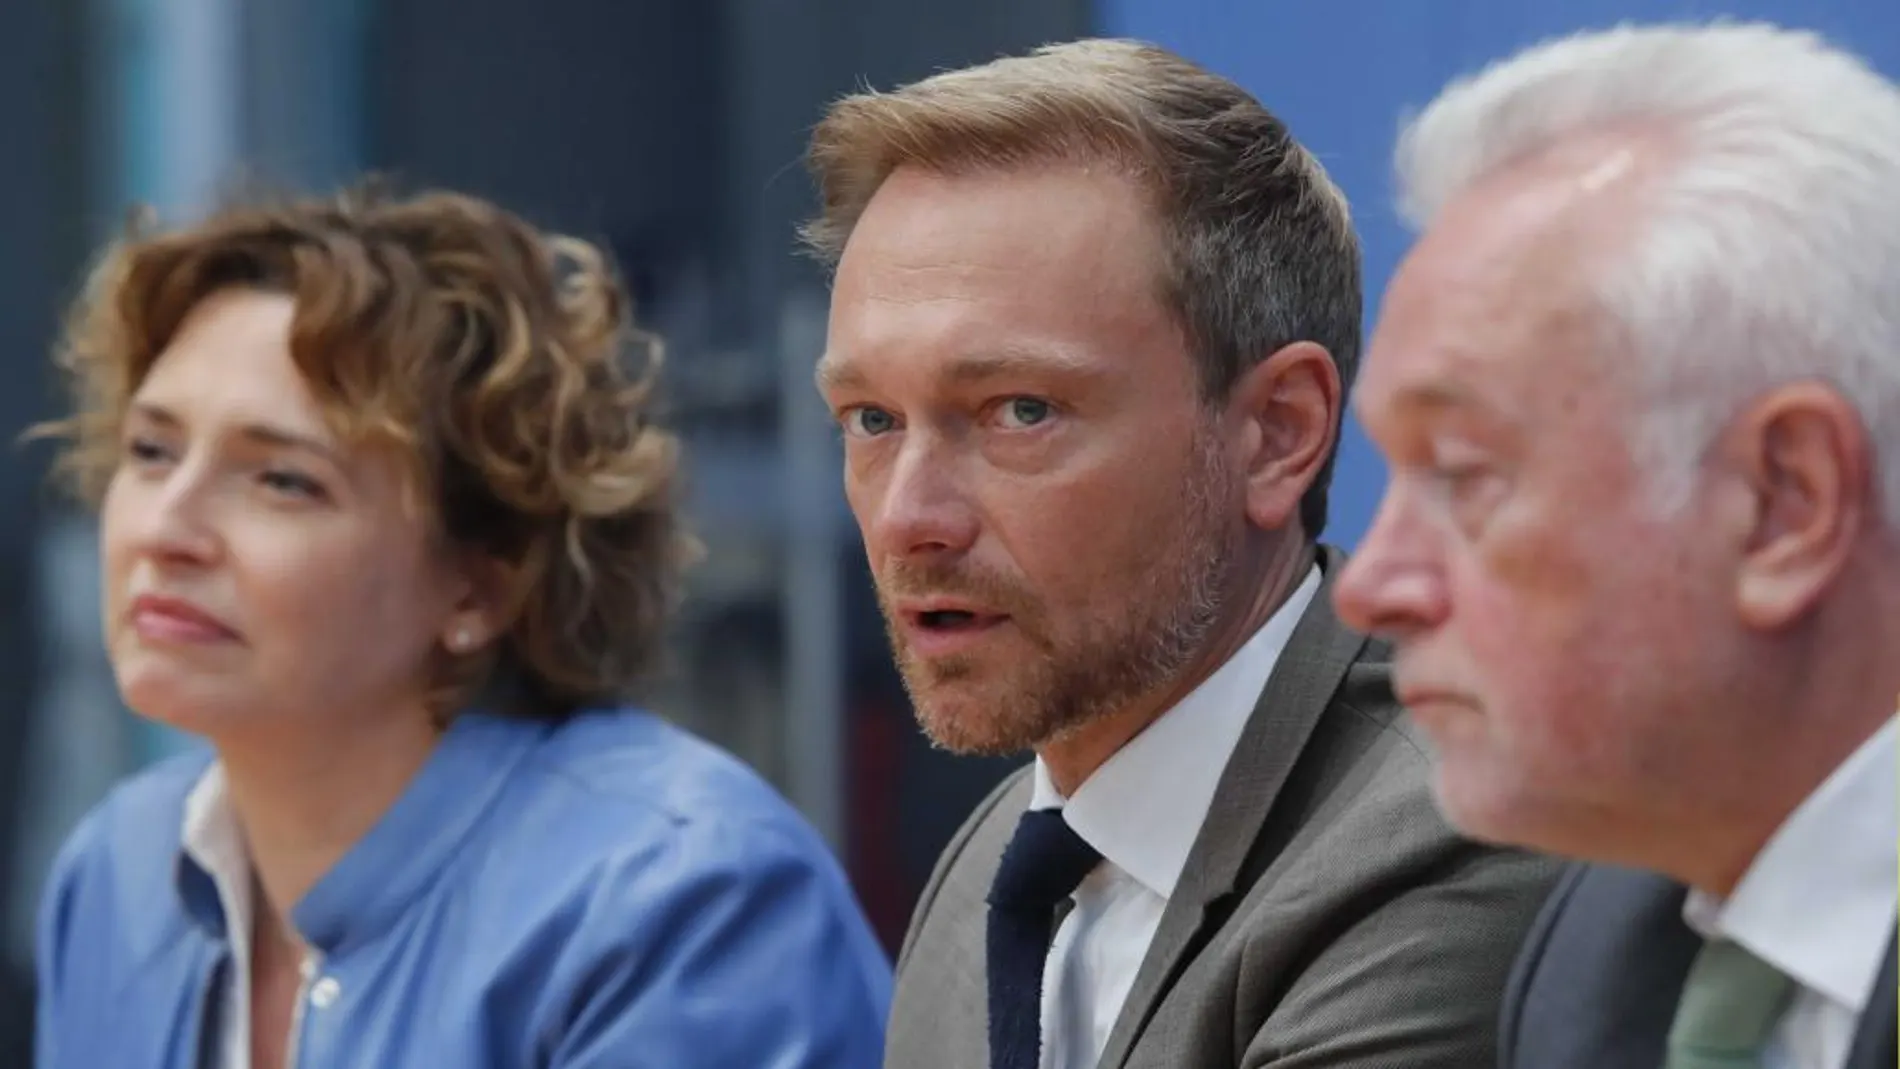 Los líderes del Partido Liberal Christian Lindner, Wolfgang Kubicki y Nicole Beer